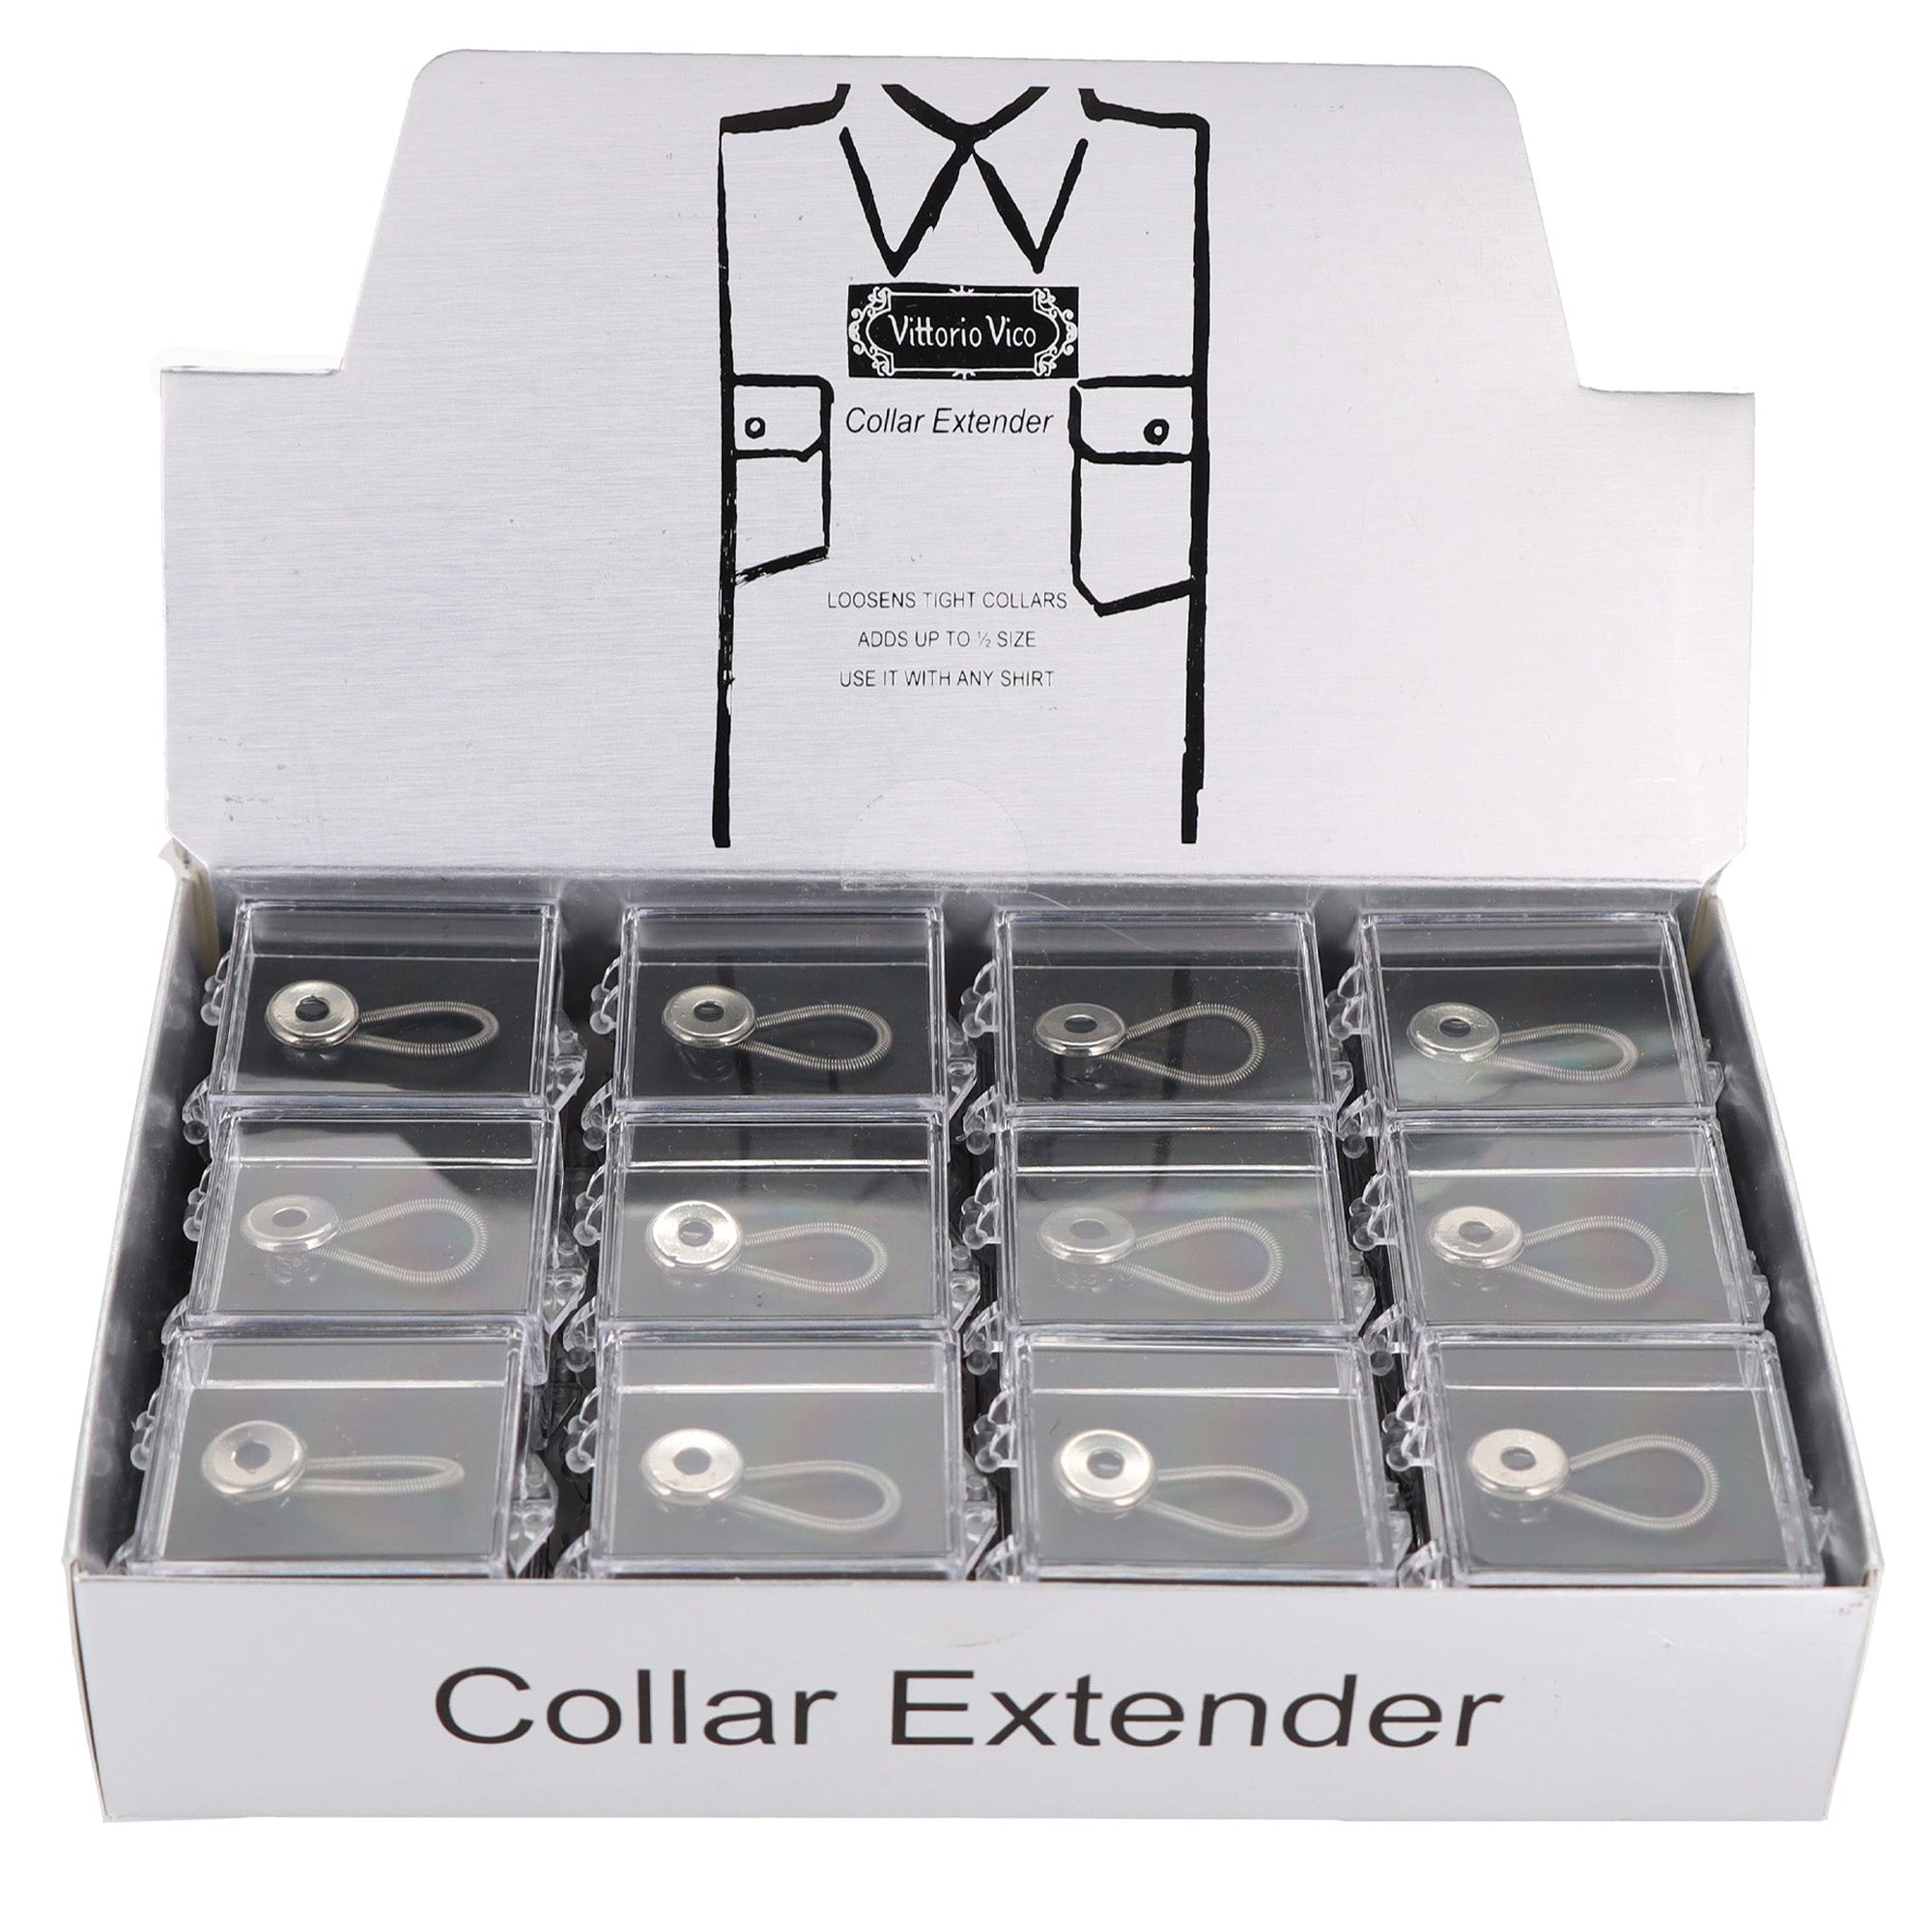 Vittorio Farina "WONDER" Button-Collar Extenders (Wholesale) by Classy Cufflinks - Button-CollarPk24 - Classy Cufflinks